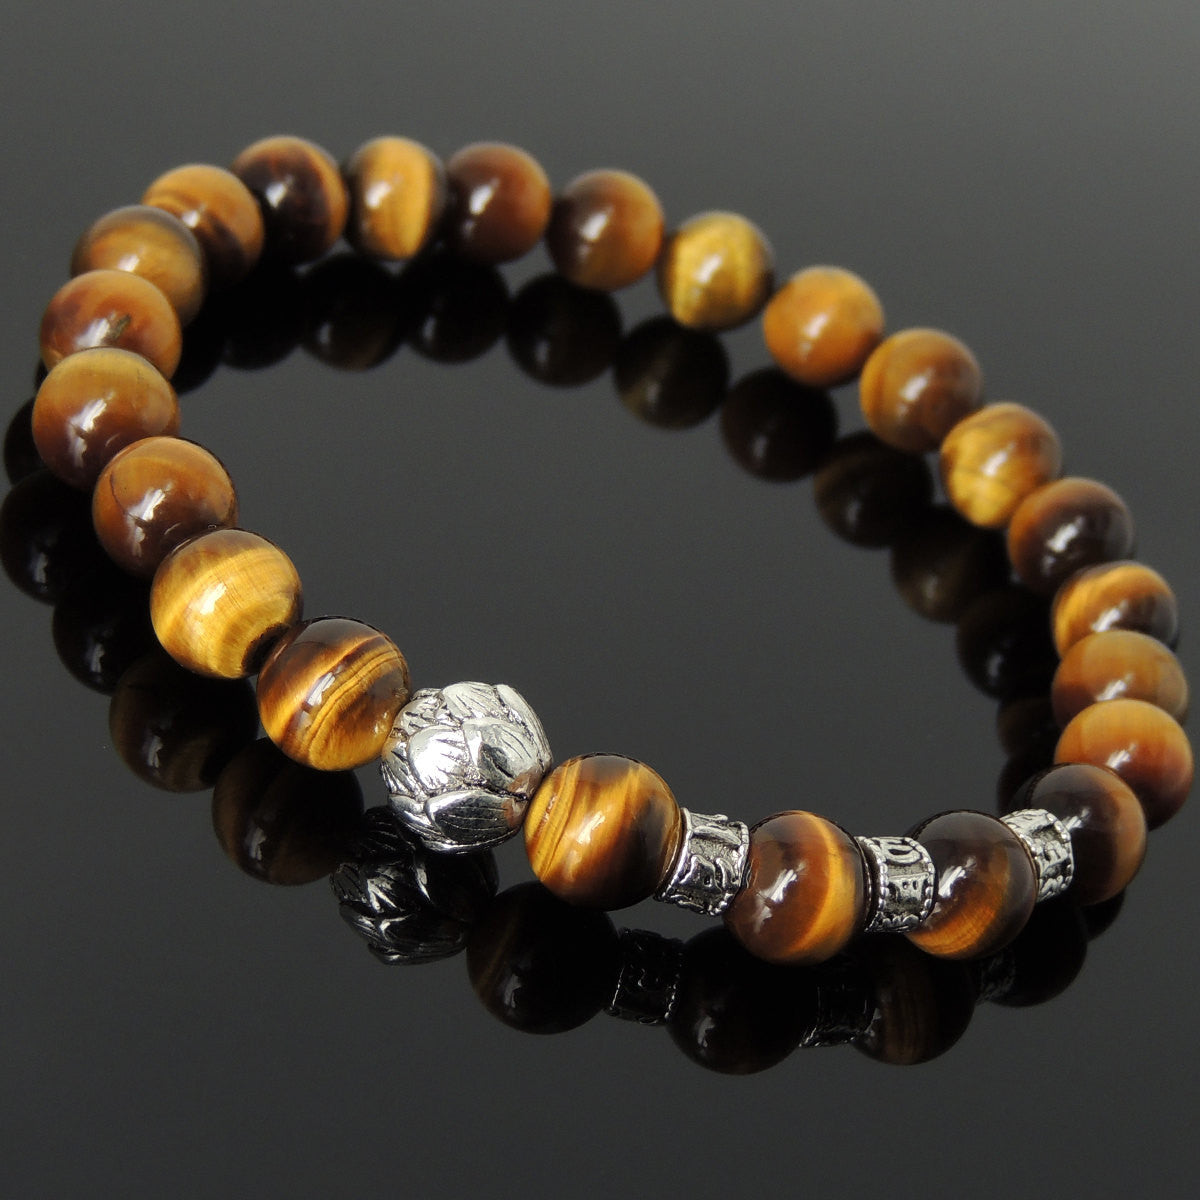 8mm Brown Tiger Eye Healing Gemstone Bracelet with Tibetan Silver Lotus Bead & OM Meditation Spacer Beads - Handmade by Gem & Silver TSB333